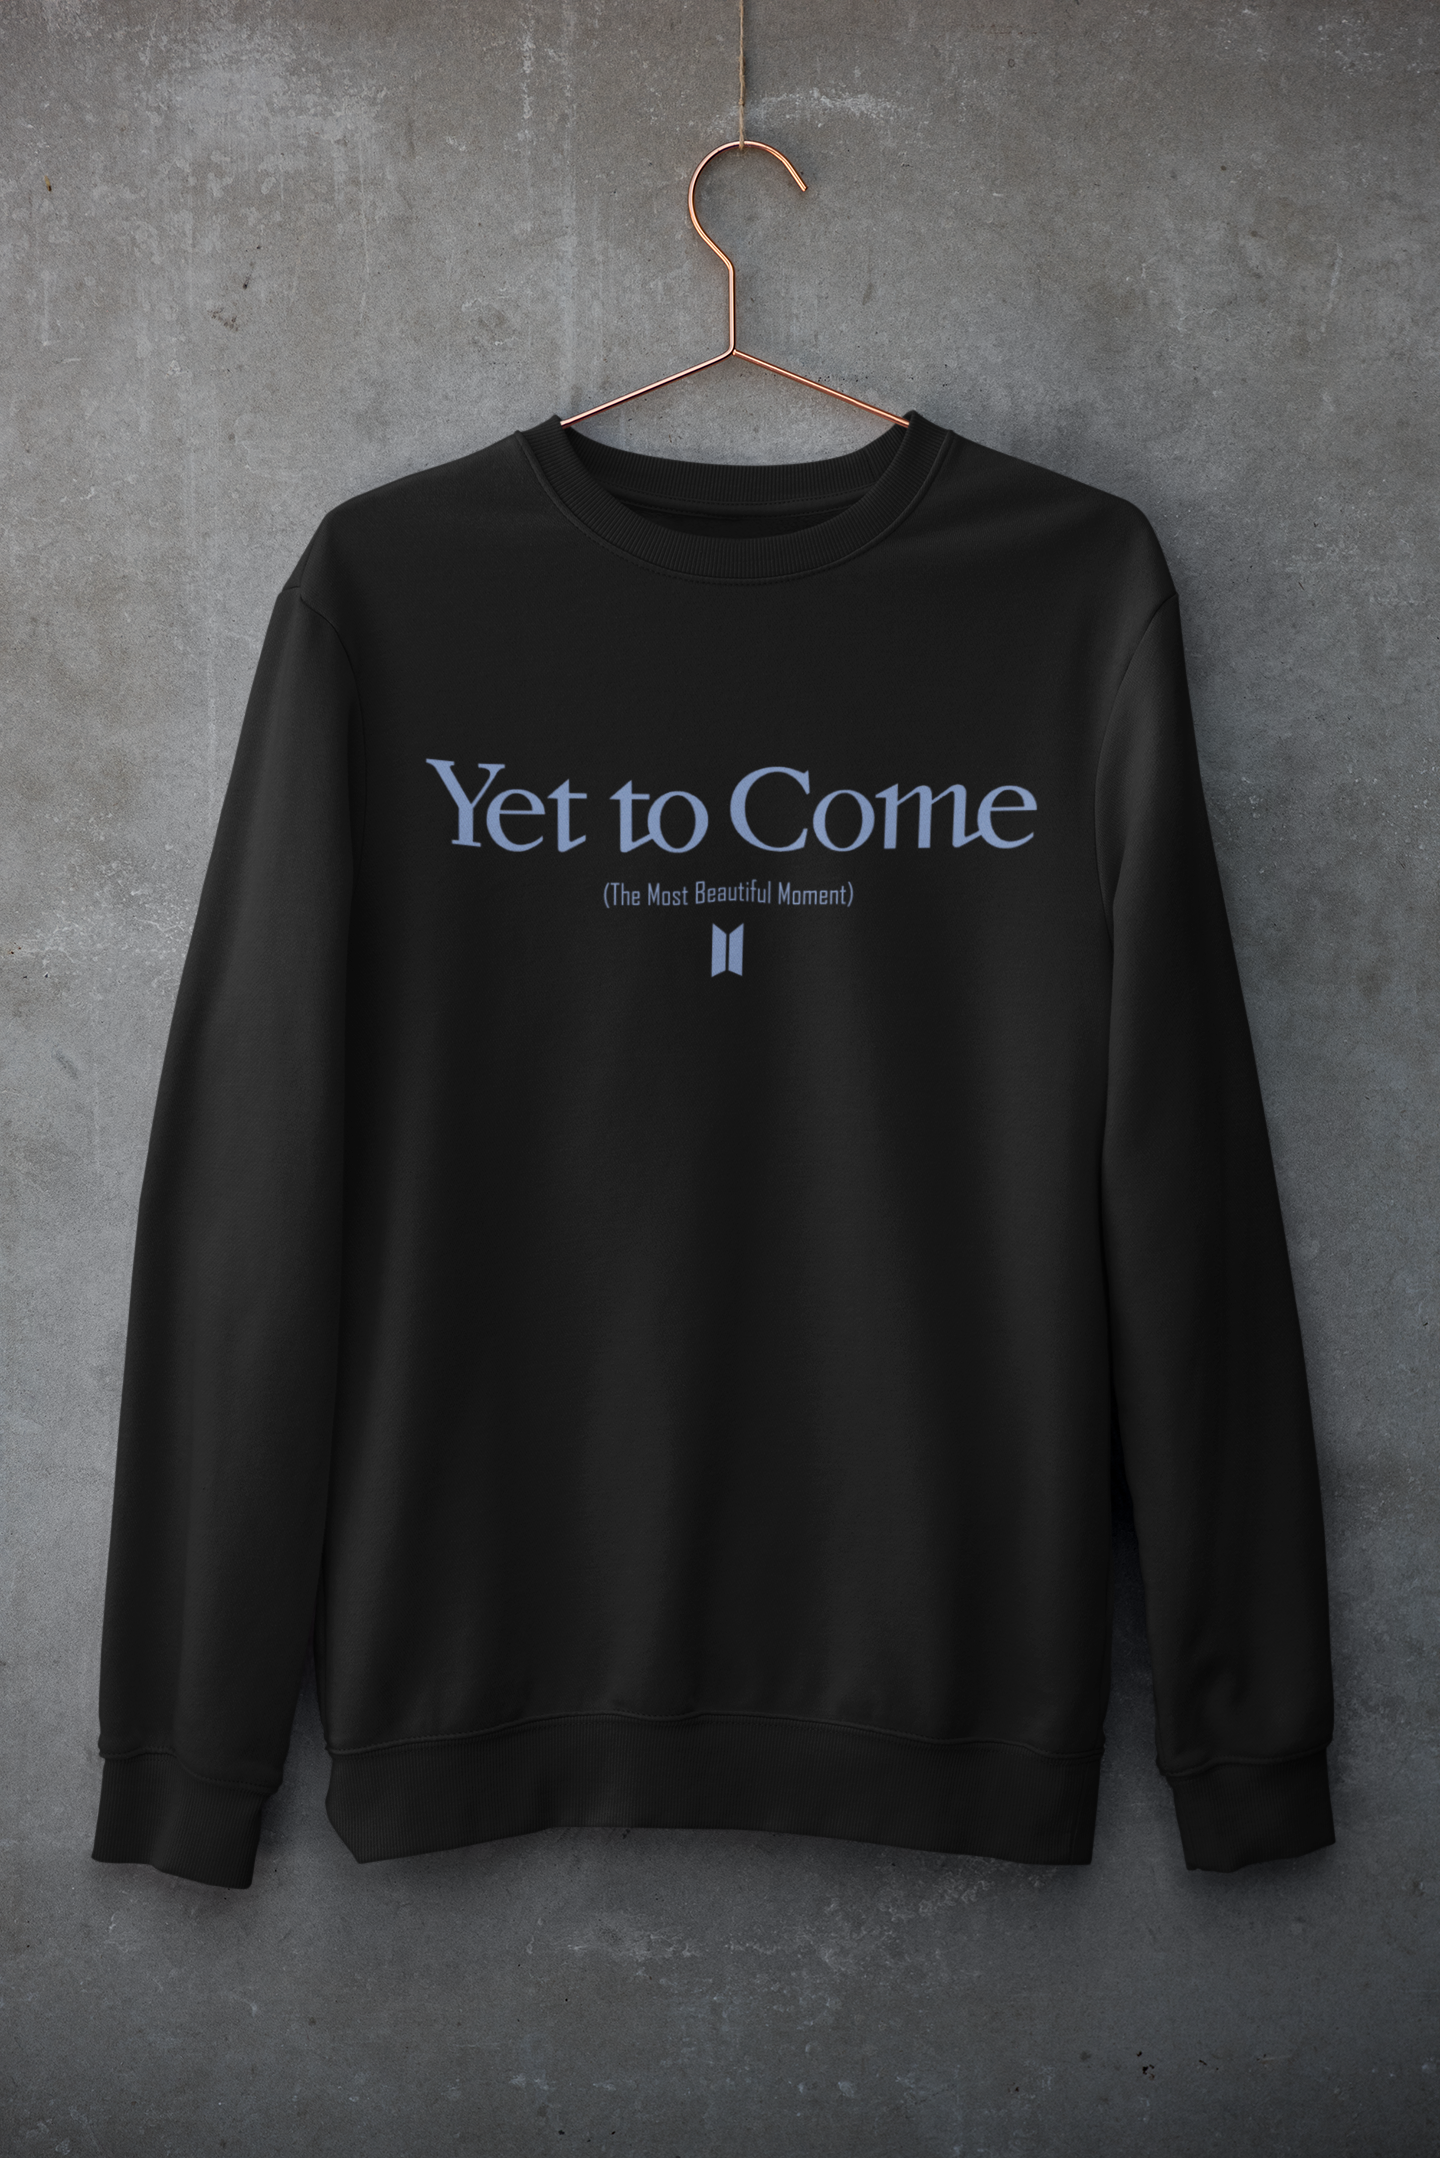 Yet To Come: BTS - Winter Sweatshirts